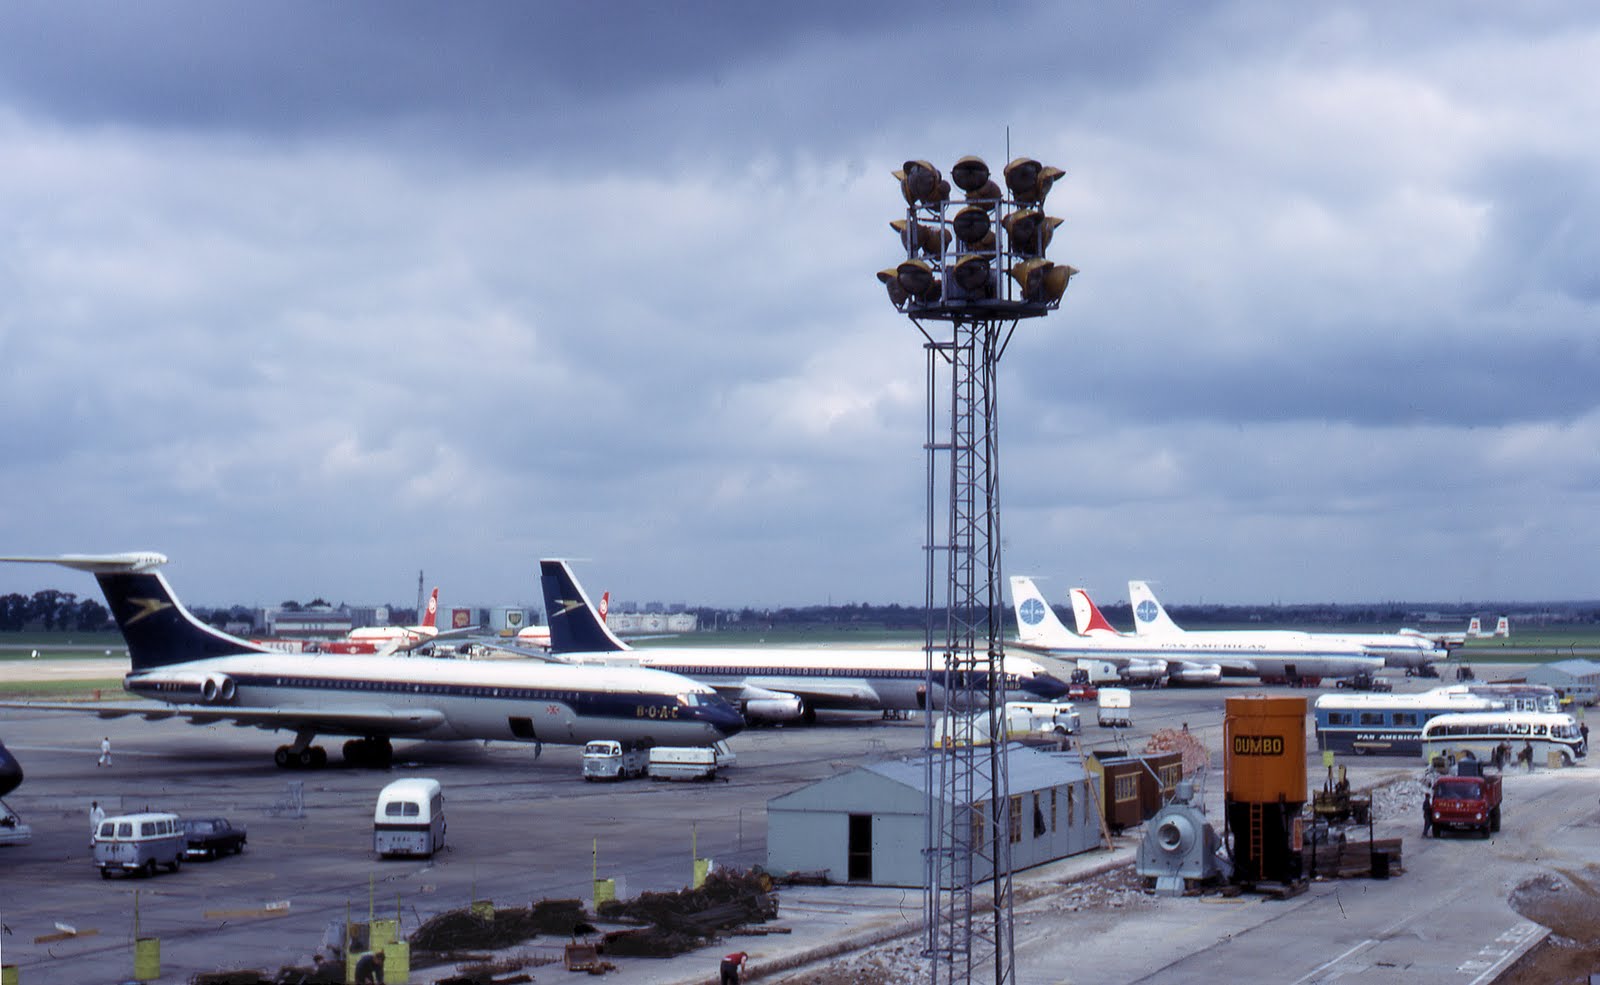 http://2.bp.blogspot.com/-aVEoKI8gXU0/Tl4xSjZ7AHI/AAAAAAAABEM/cwTlx-BhyDw/s1600/London_heathrow_airport_in_1965_.jpg